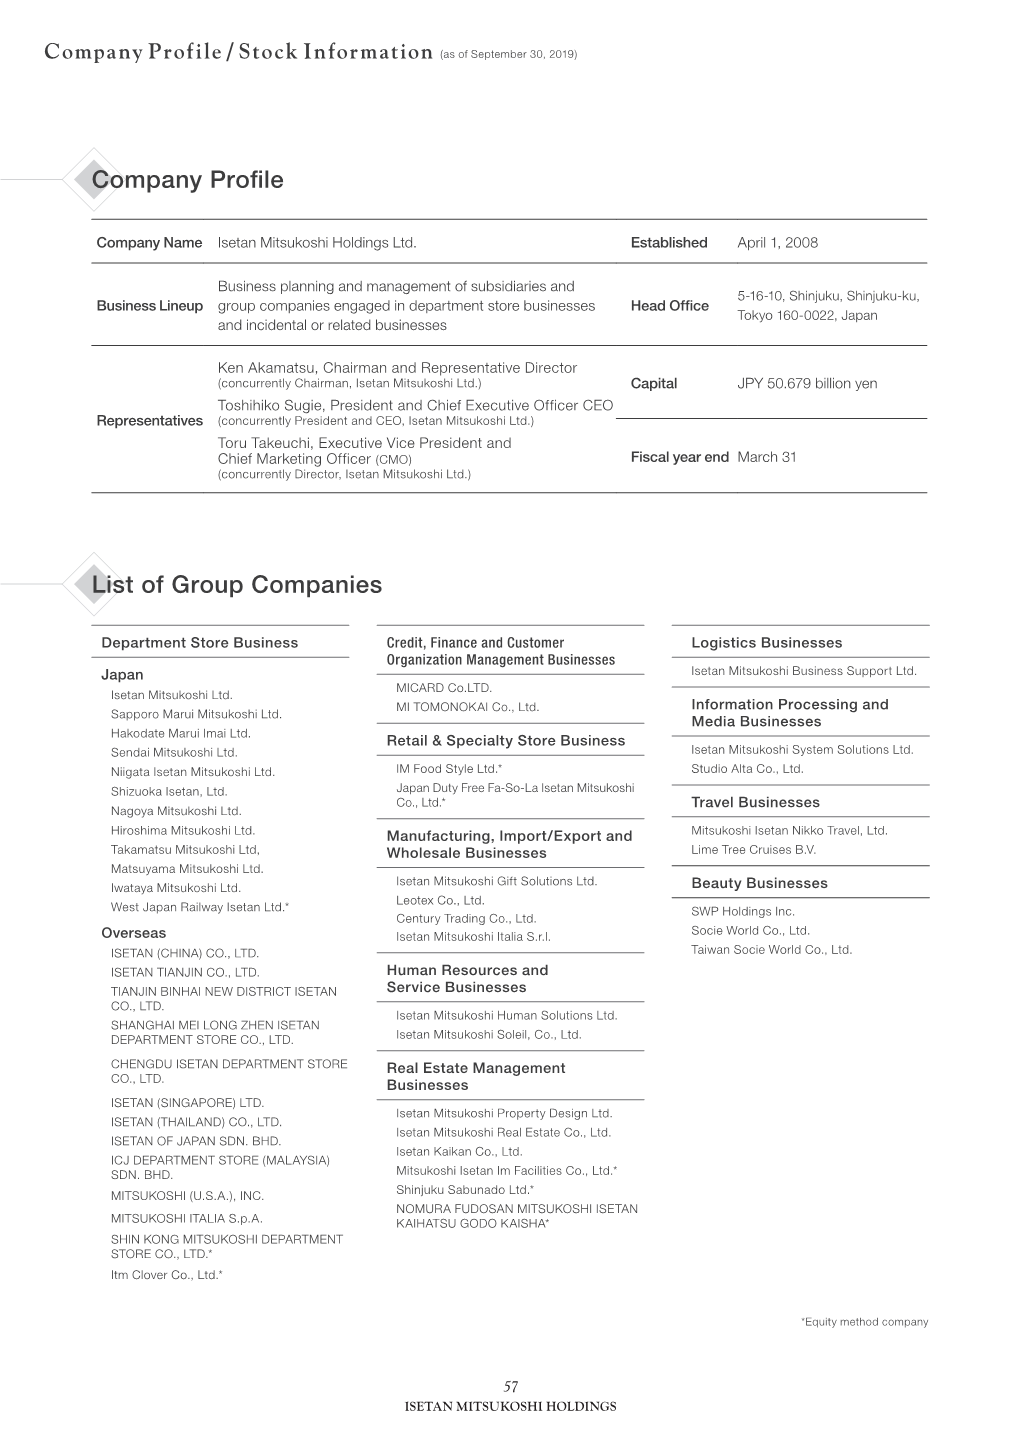 List of Group Companies Company Profile